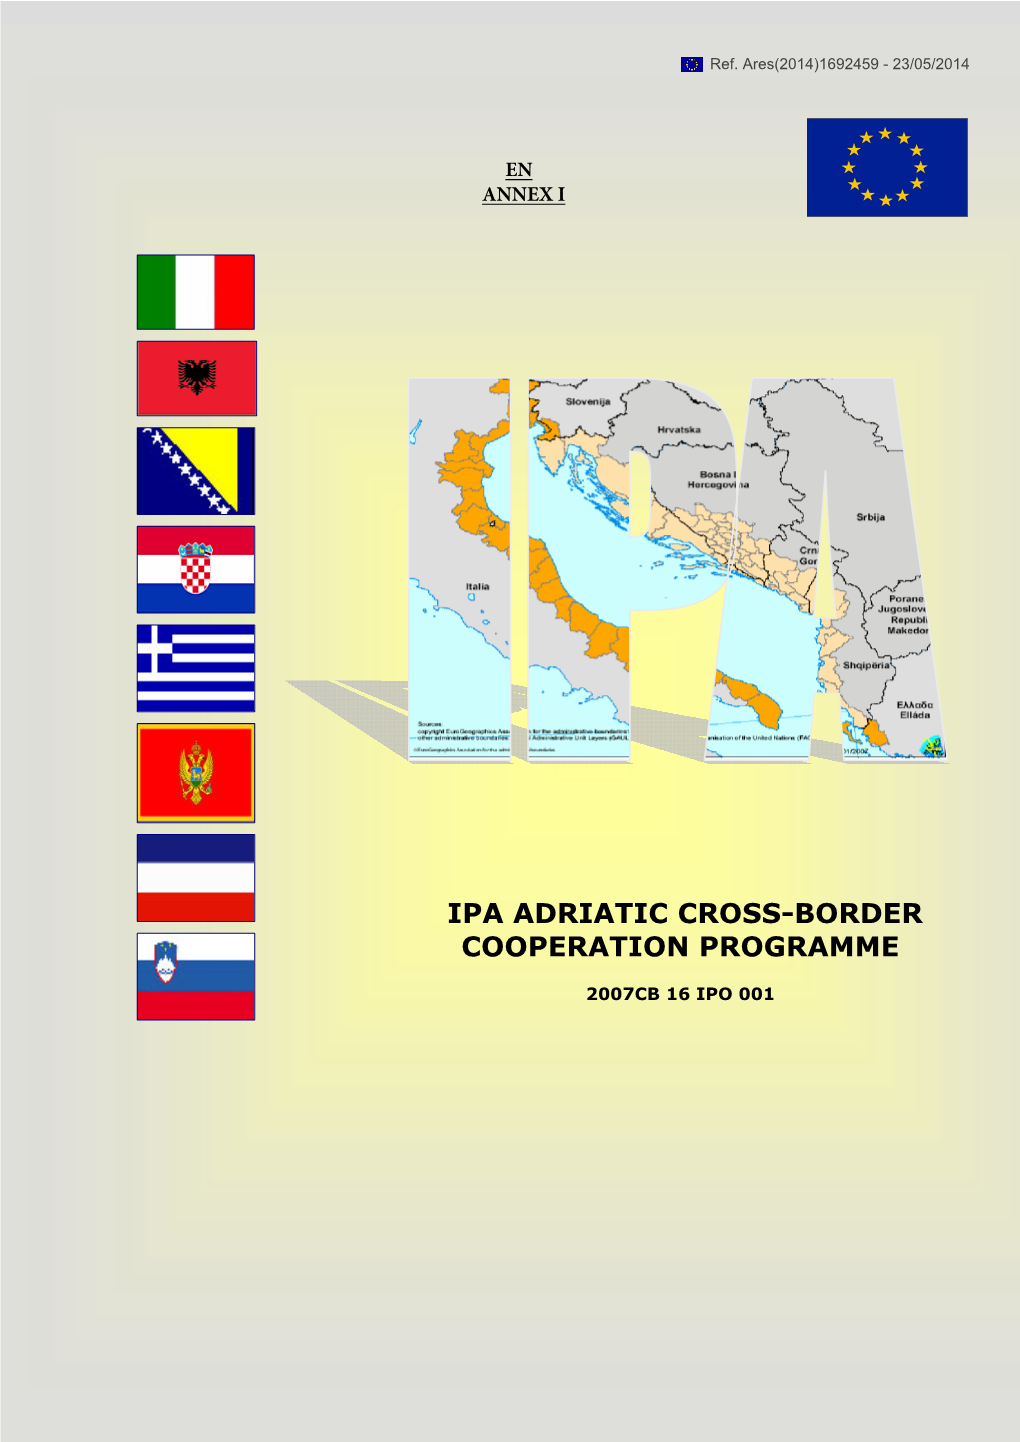 Ipa Adriatic Cross-Border Cooperation Programme